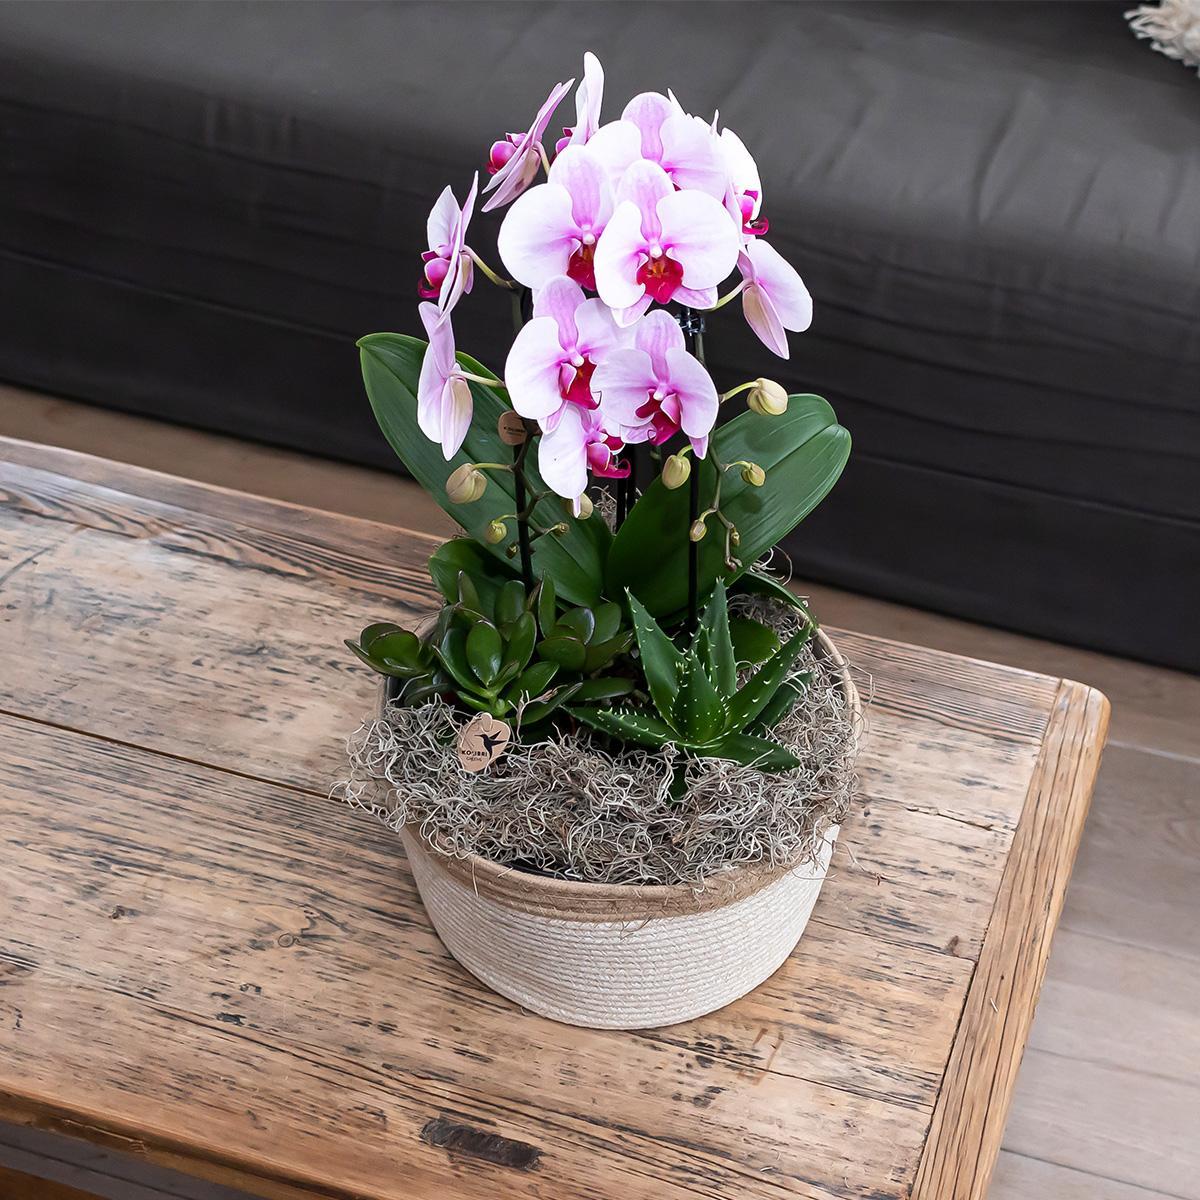 Kolibri Orchids | roze Phalaenopsis orchidee - Niagara Fall  - potmaat Ø12cm | bloeiende kamerplant - vers van de kweker